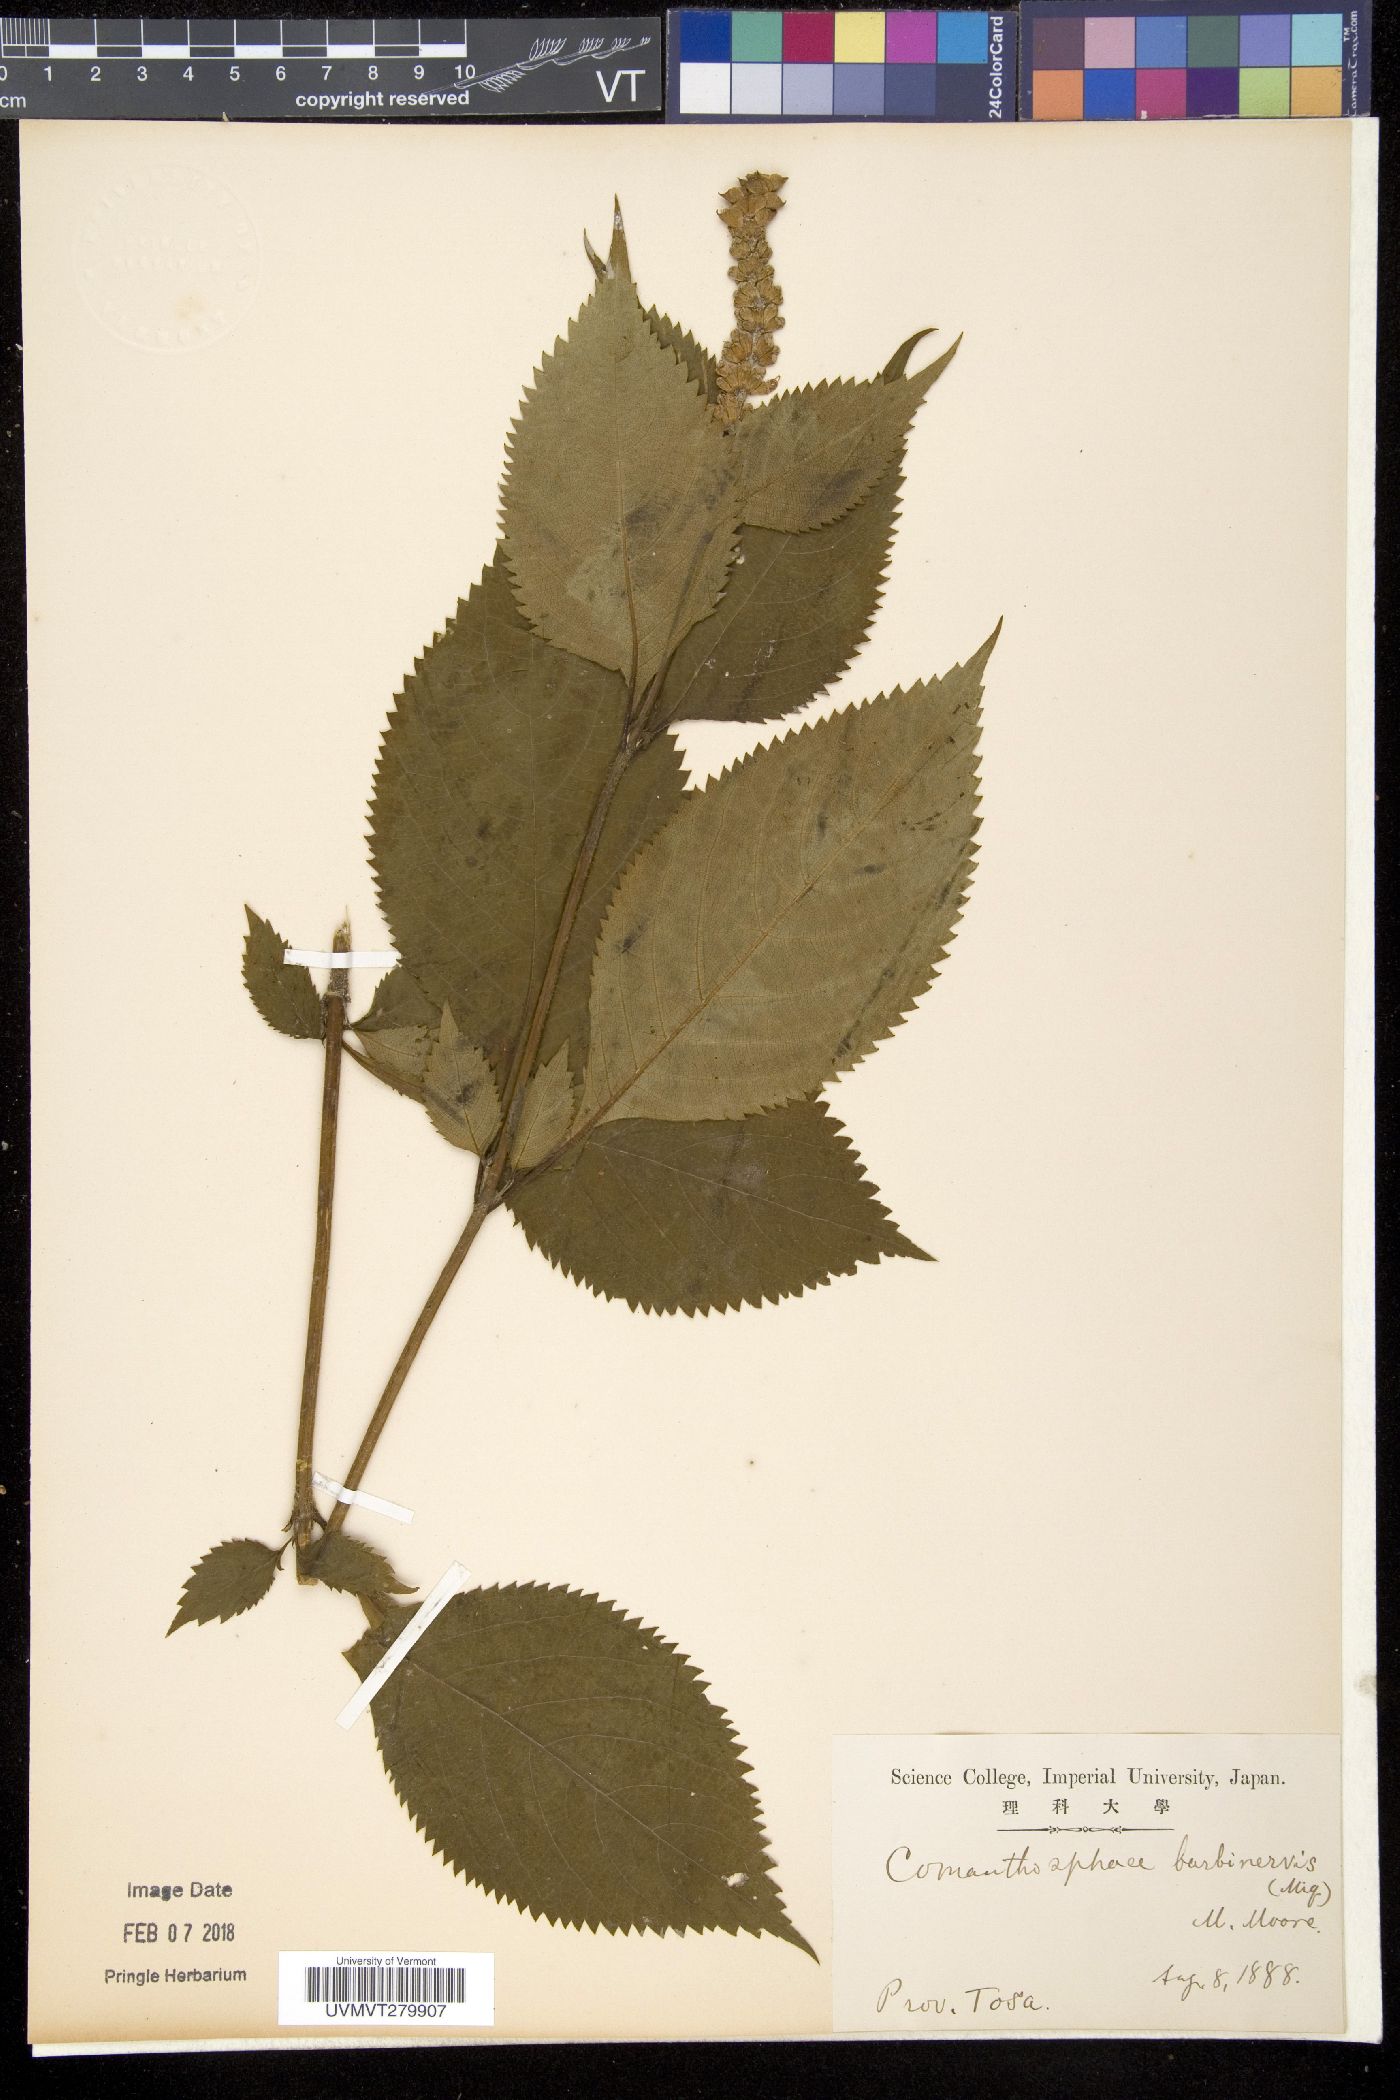 Comanthosphace japonica image